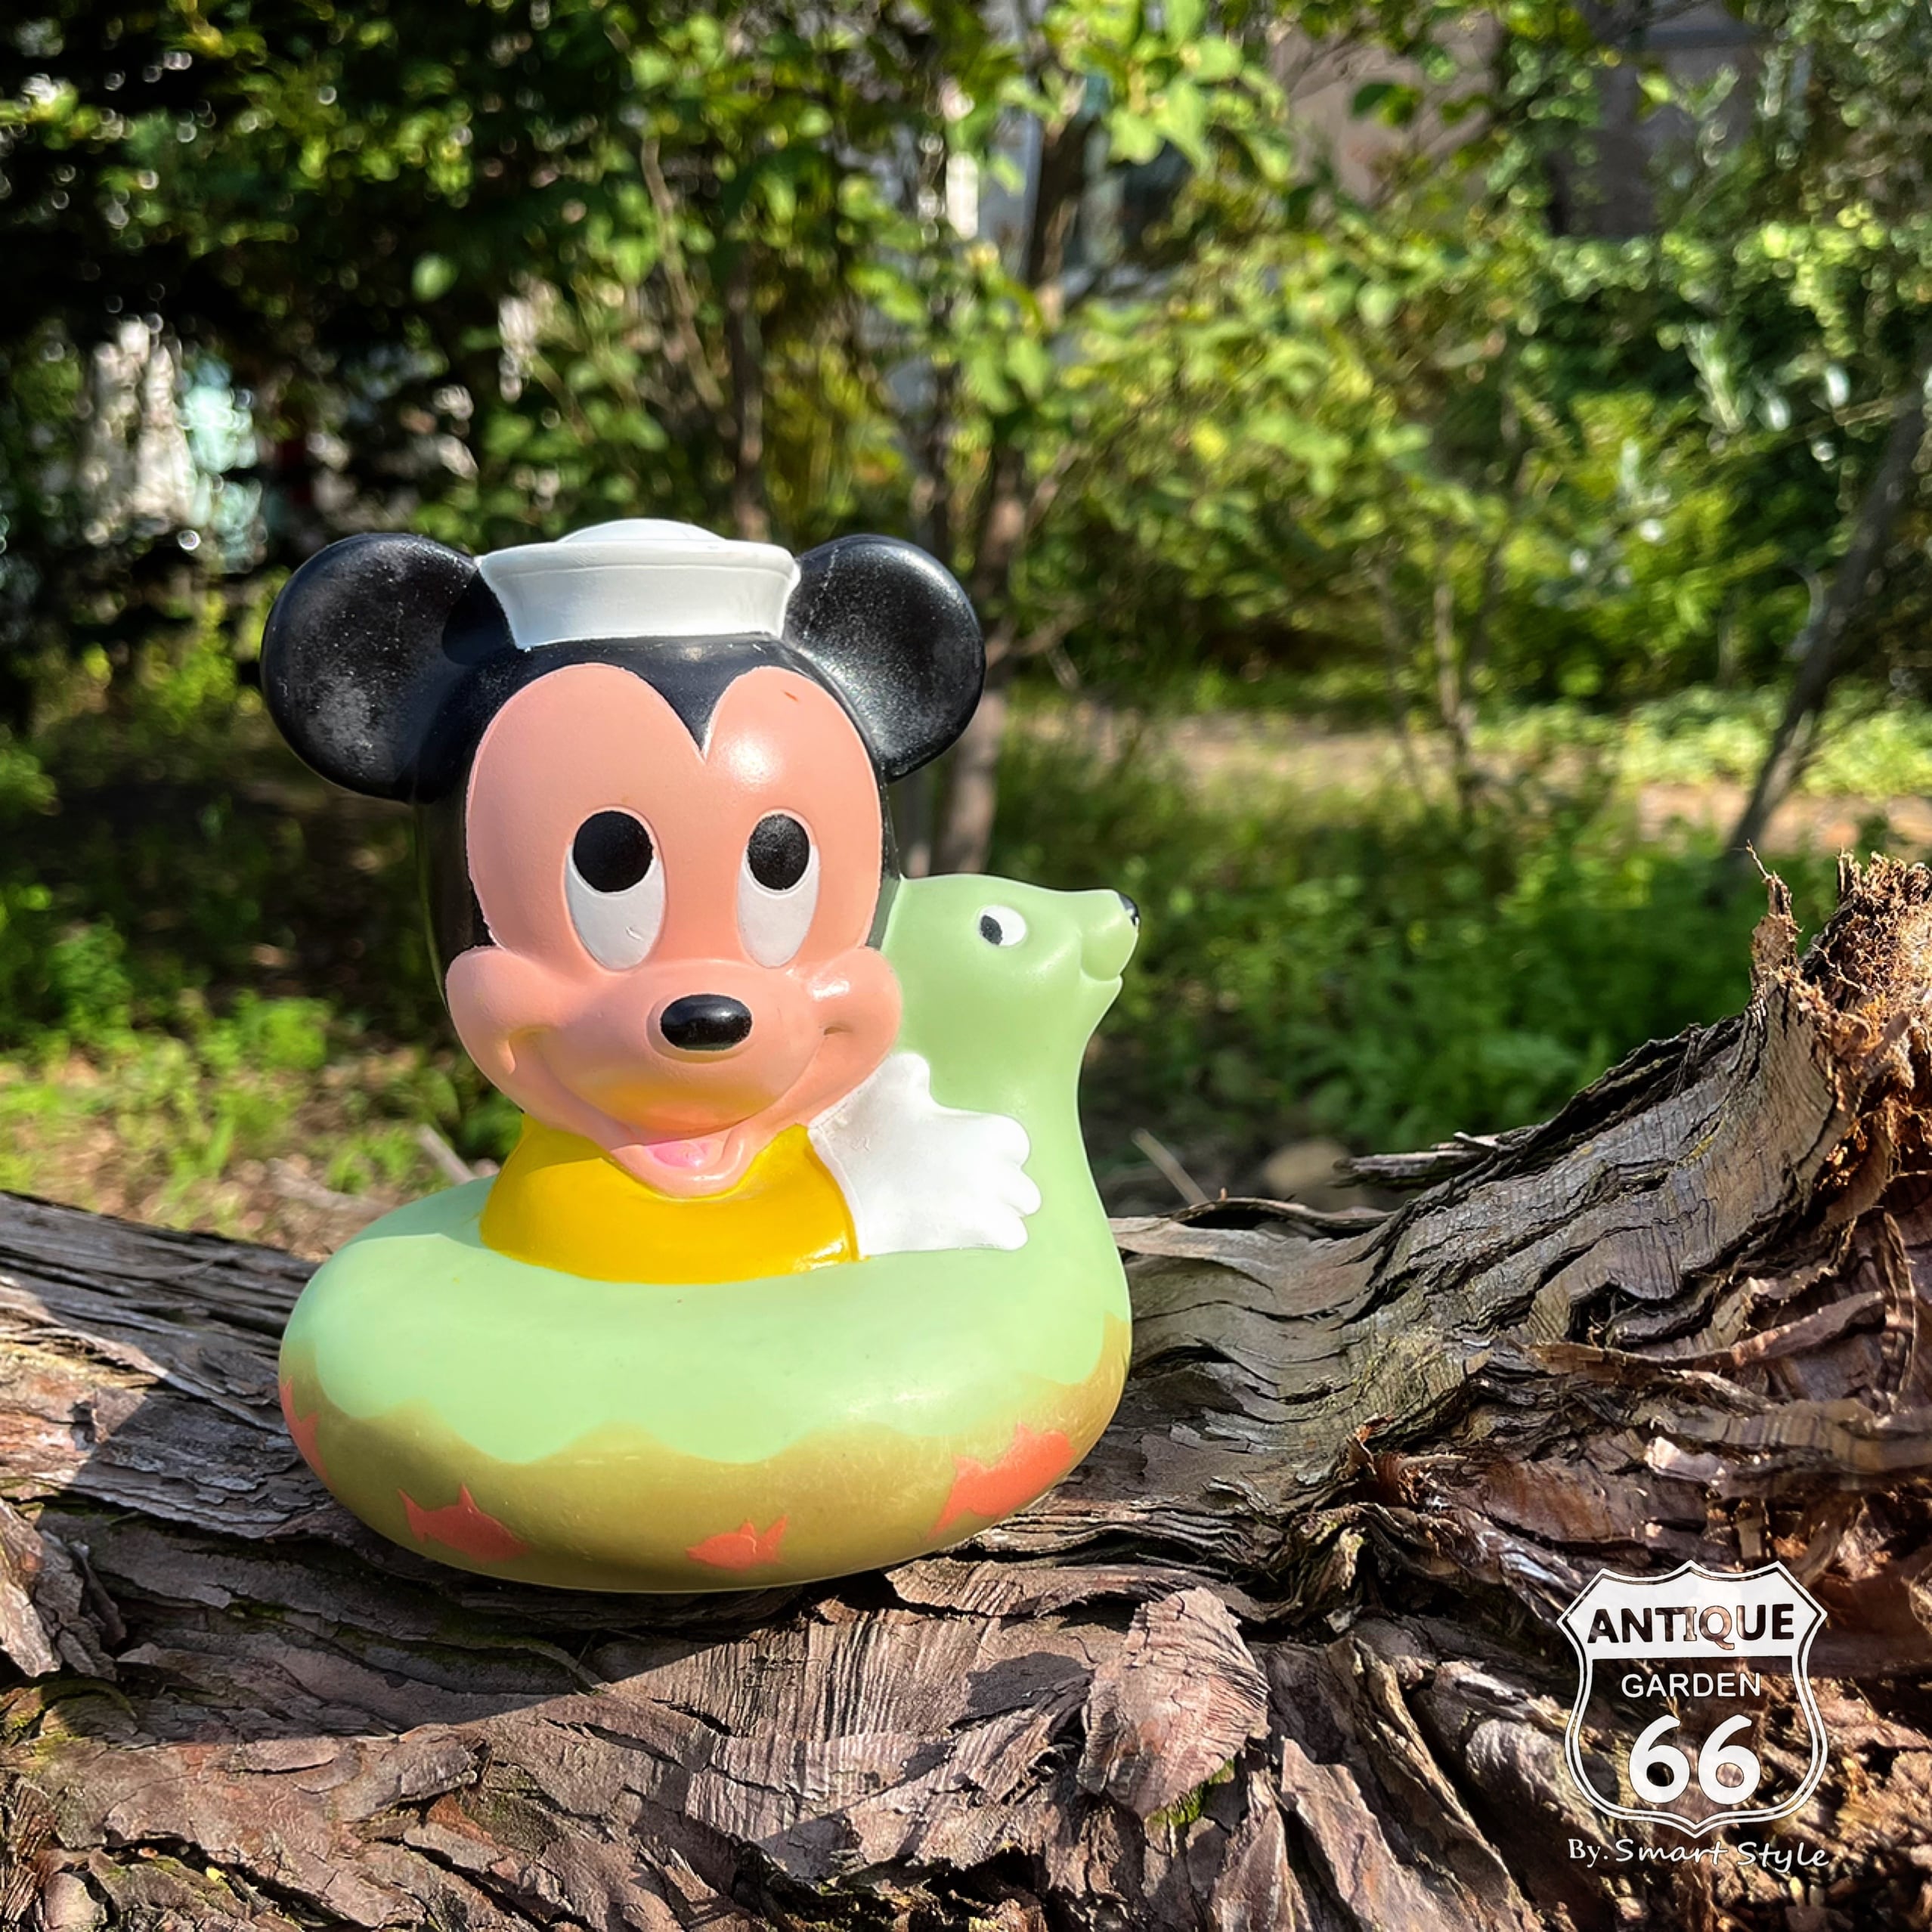 Baby Mickey Mouse ディズニー ベビーミッキーマウス ソフビ人形